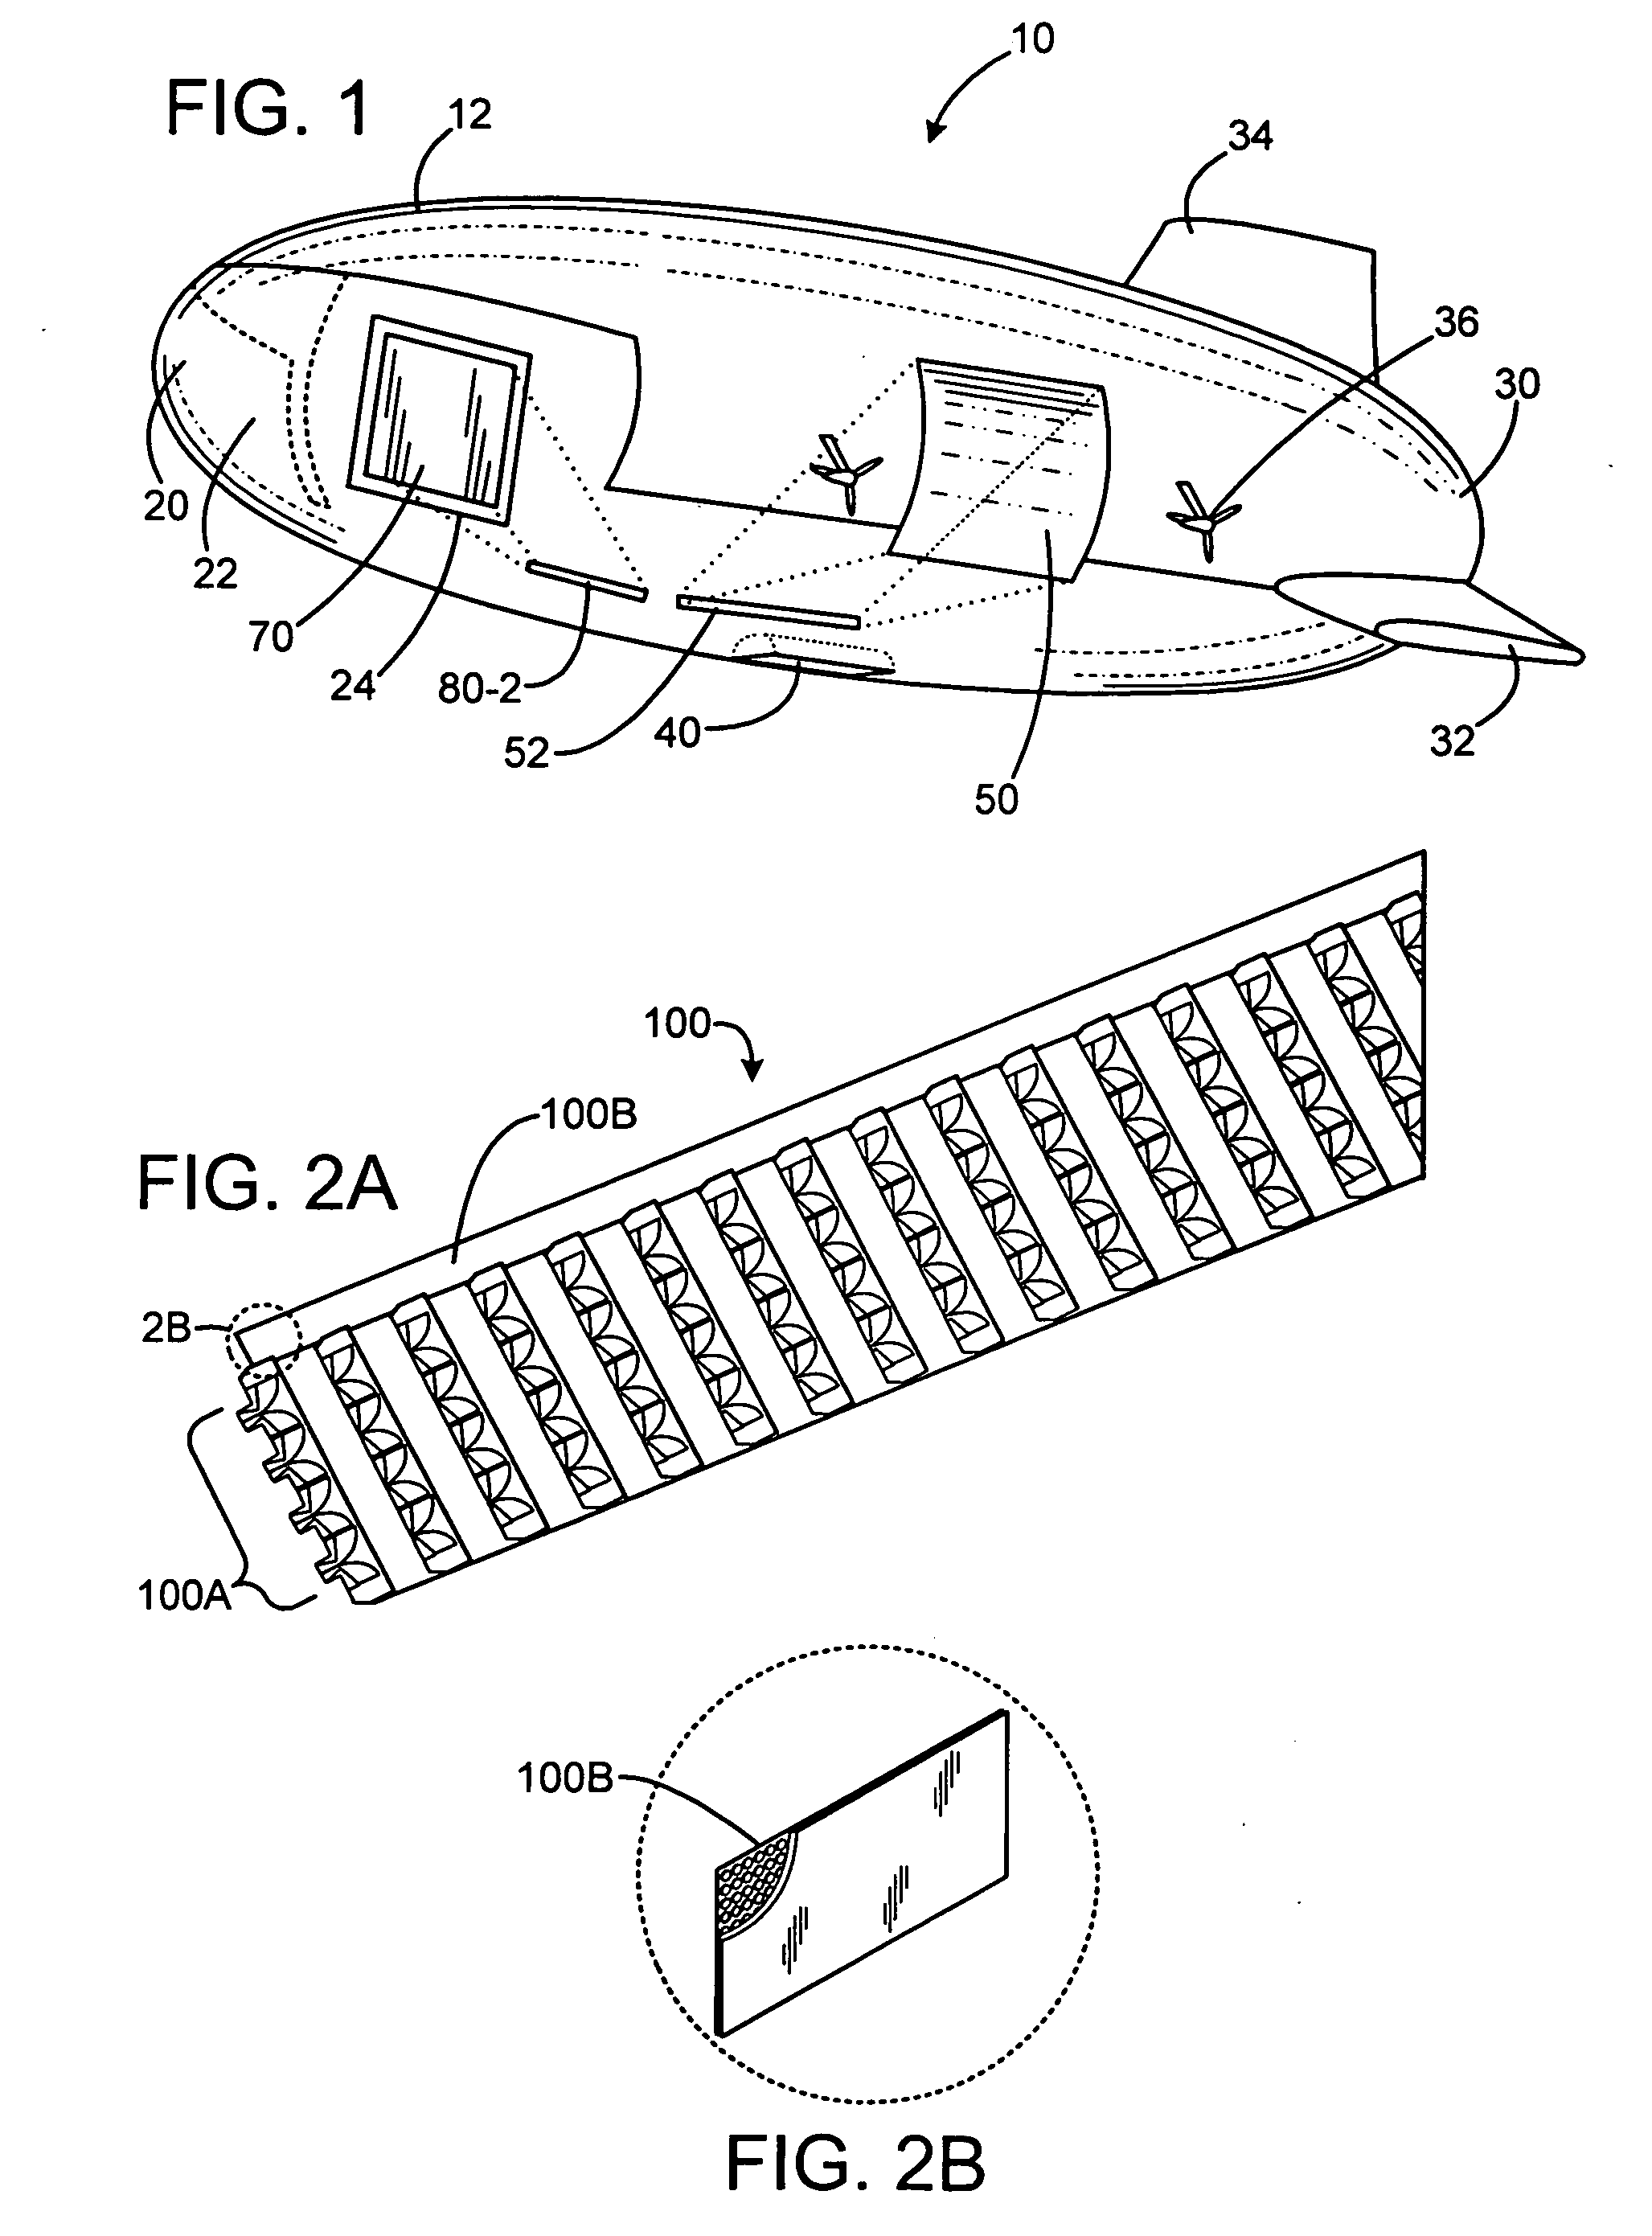 Airship mounted array